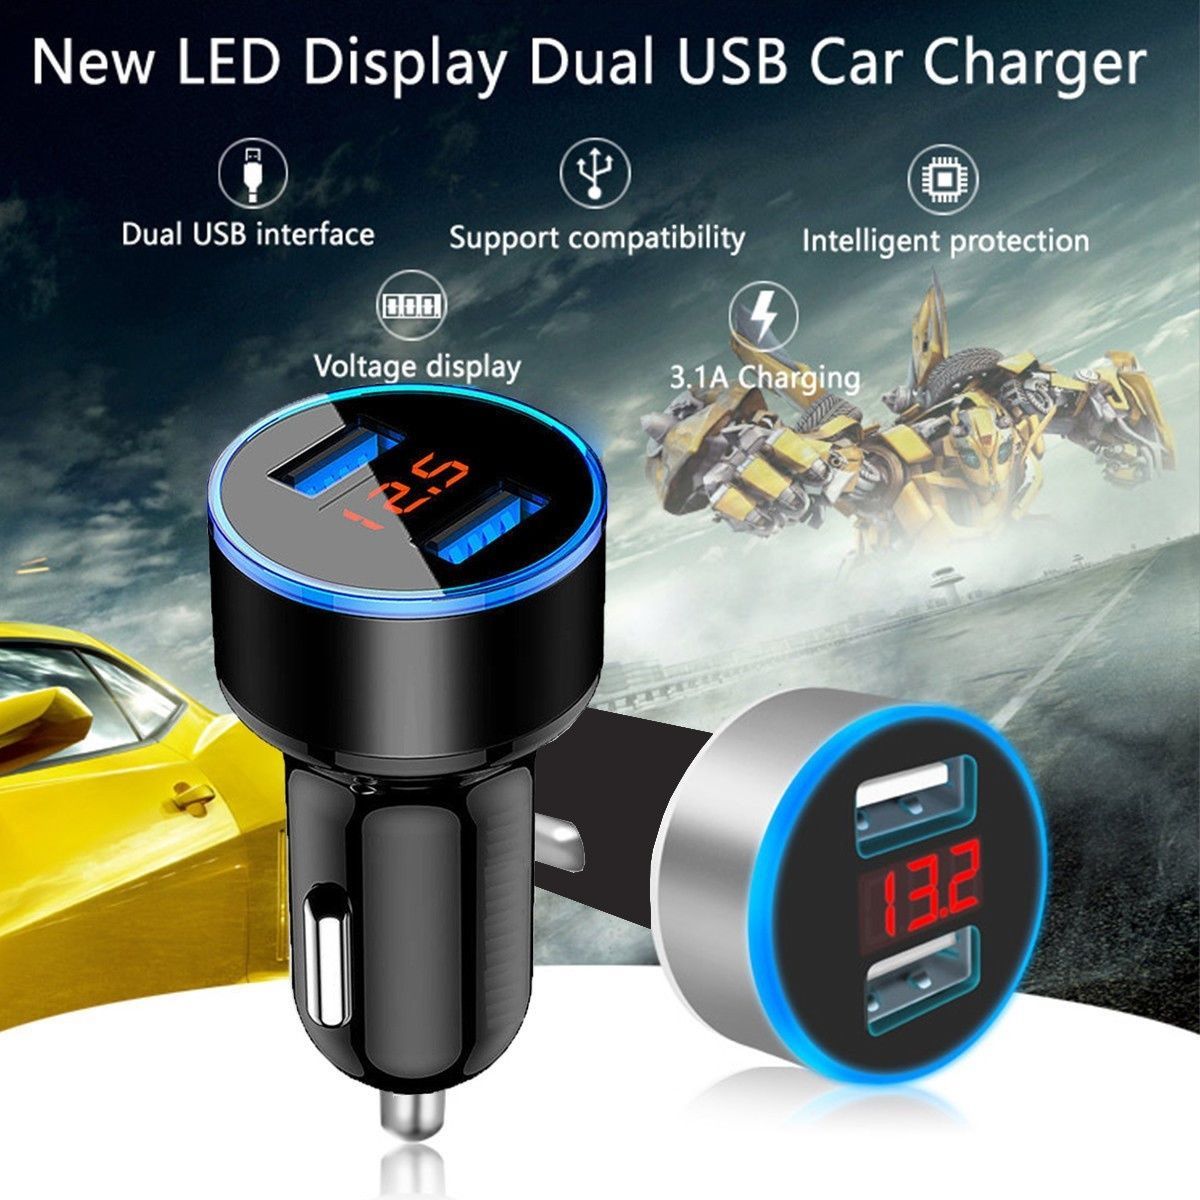 5V-31A-LED-Dual-USB-Car-Charger-2-Port-Adapter-C-igarette-Socket-L-ighter-For-Cell-Phone-1544067